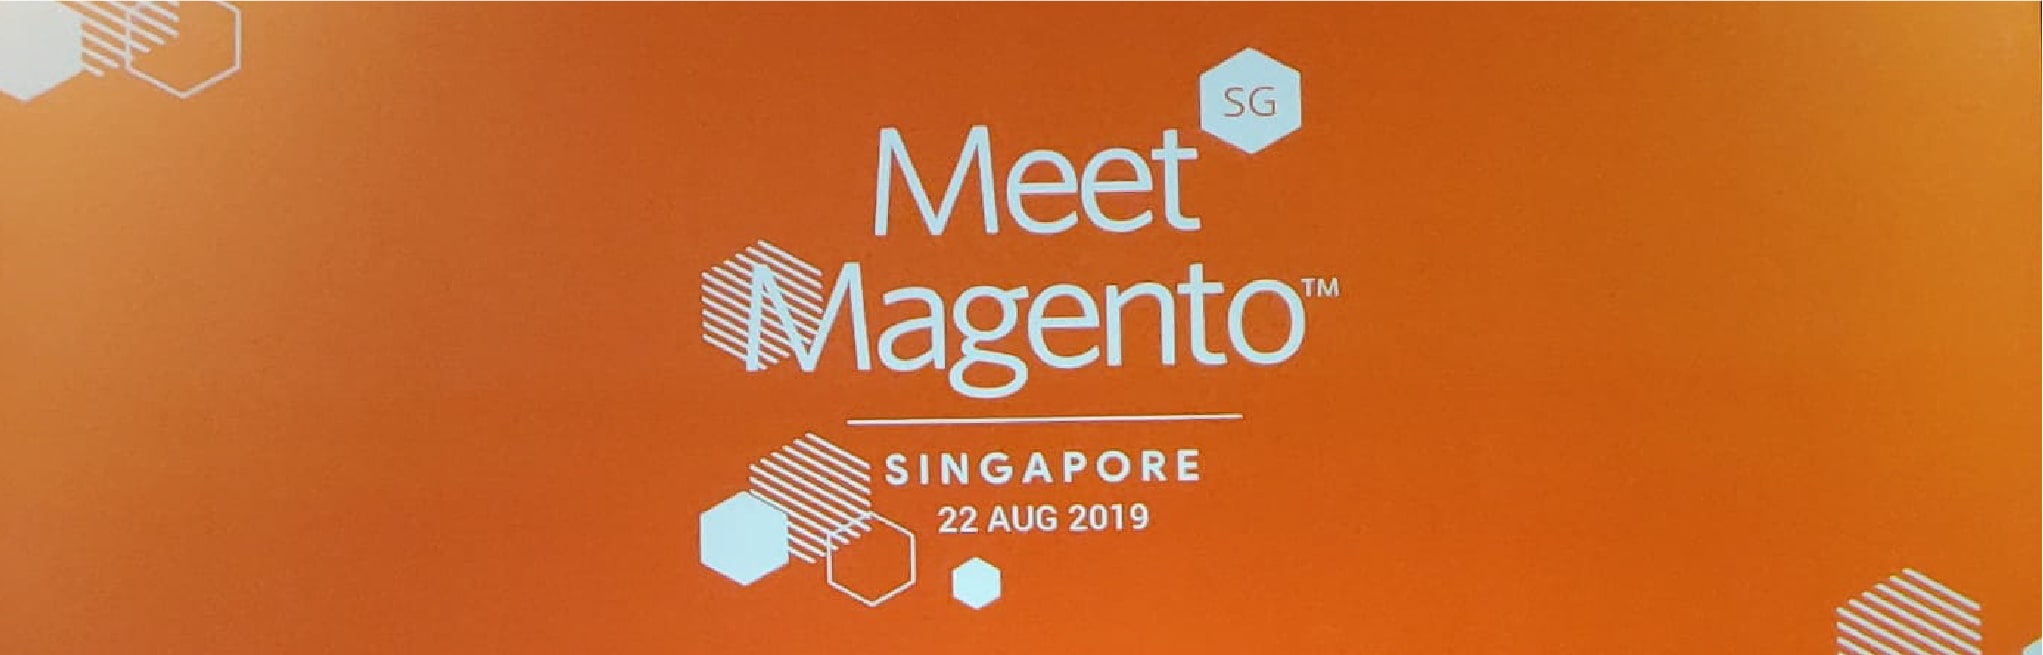 Summarizing a remarkable event, Meet Magento 2019 Singapore